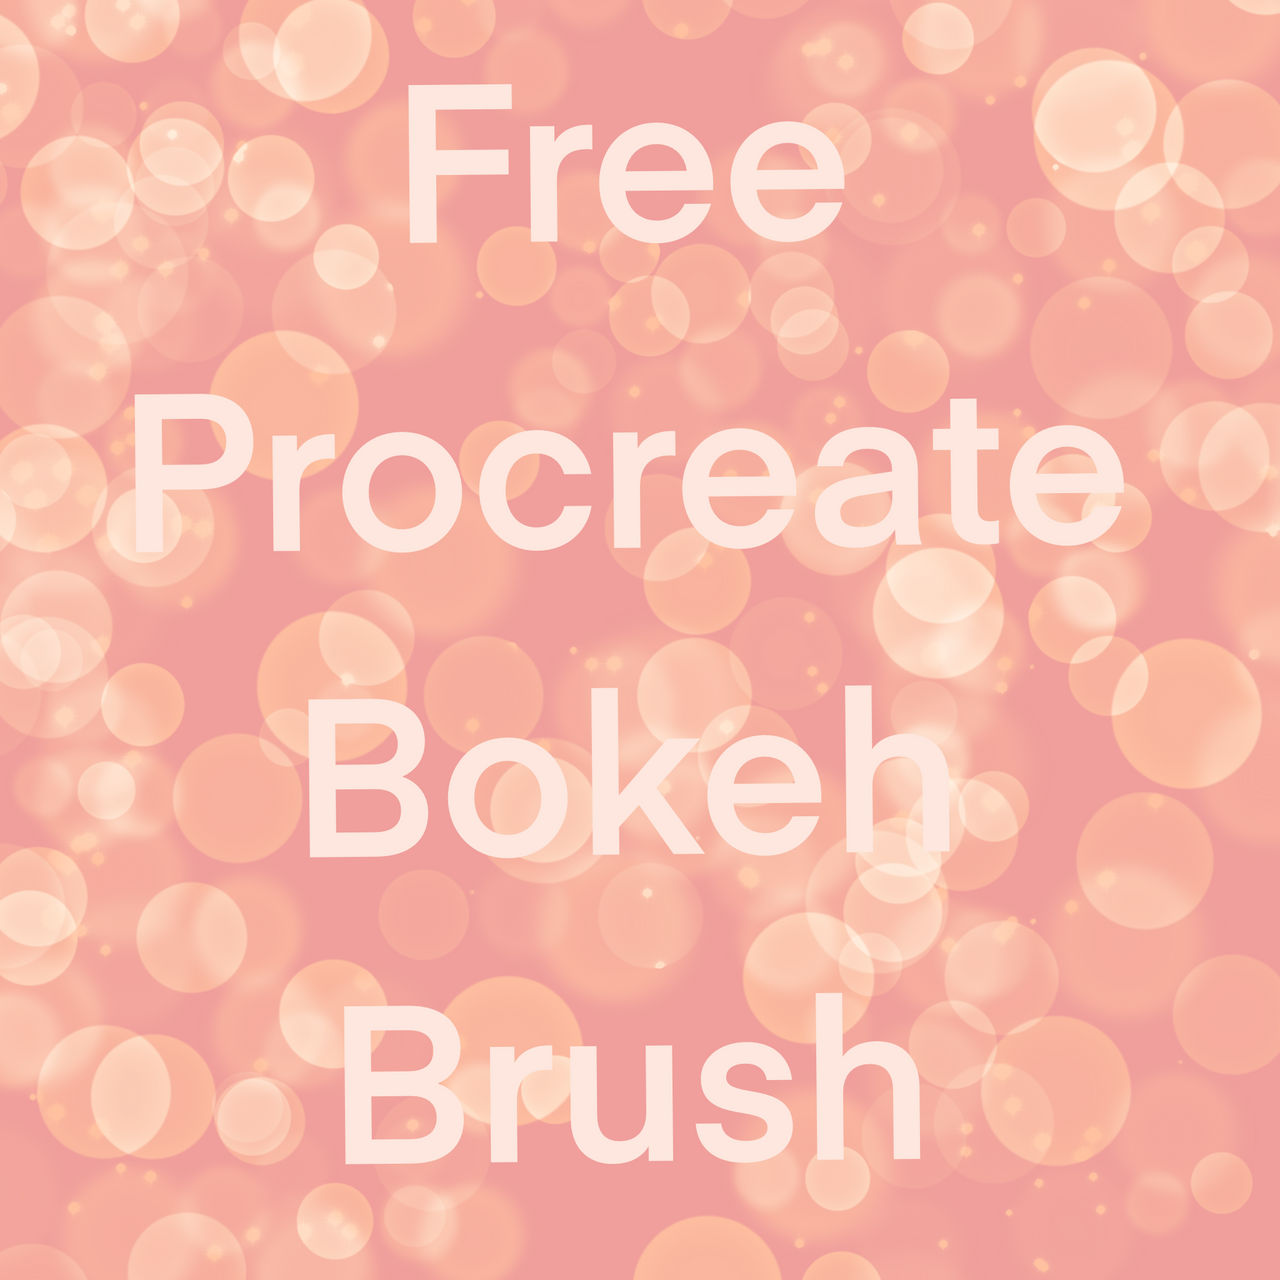 procreate bokeh brush free